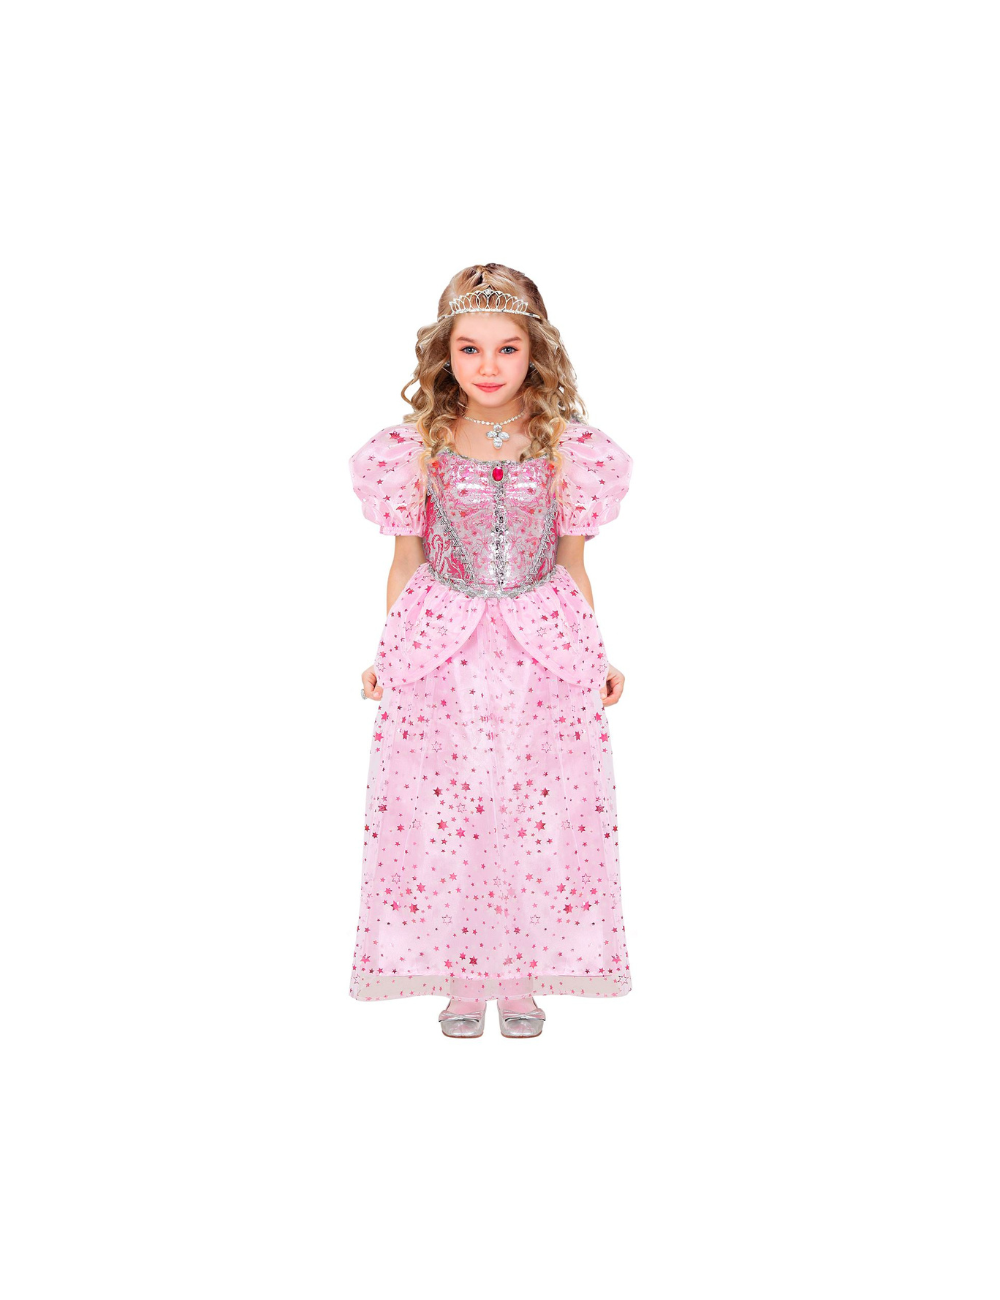 deguisement princesse marie 8 ans - robe rose et argente - costume